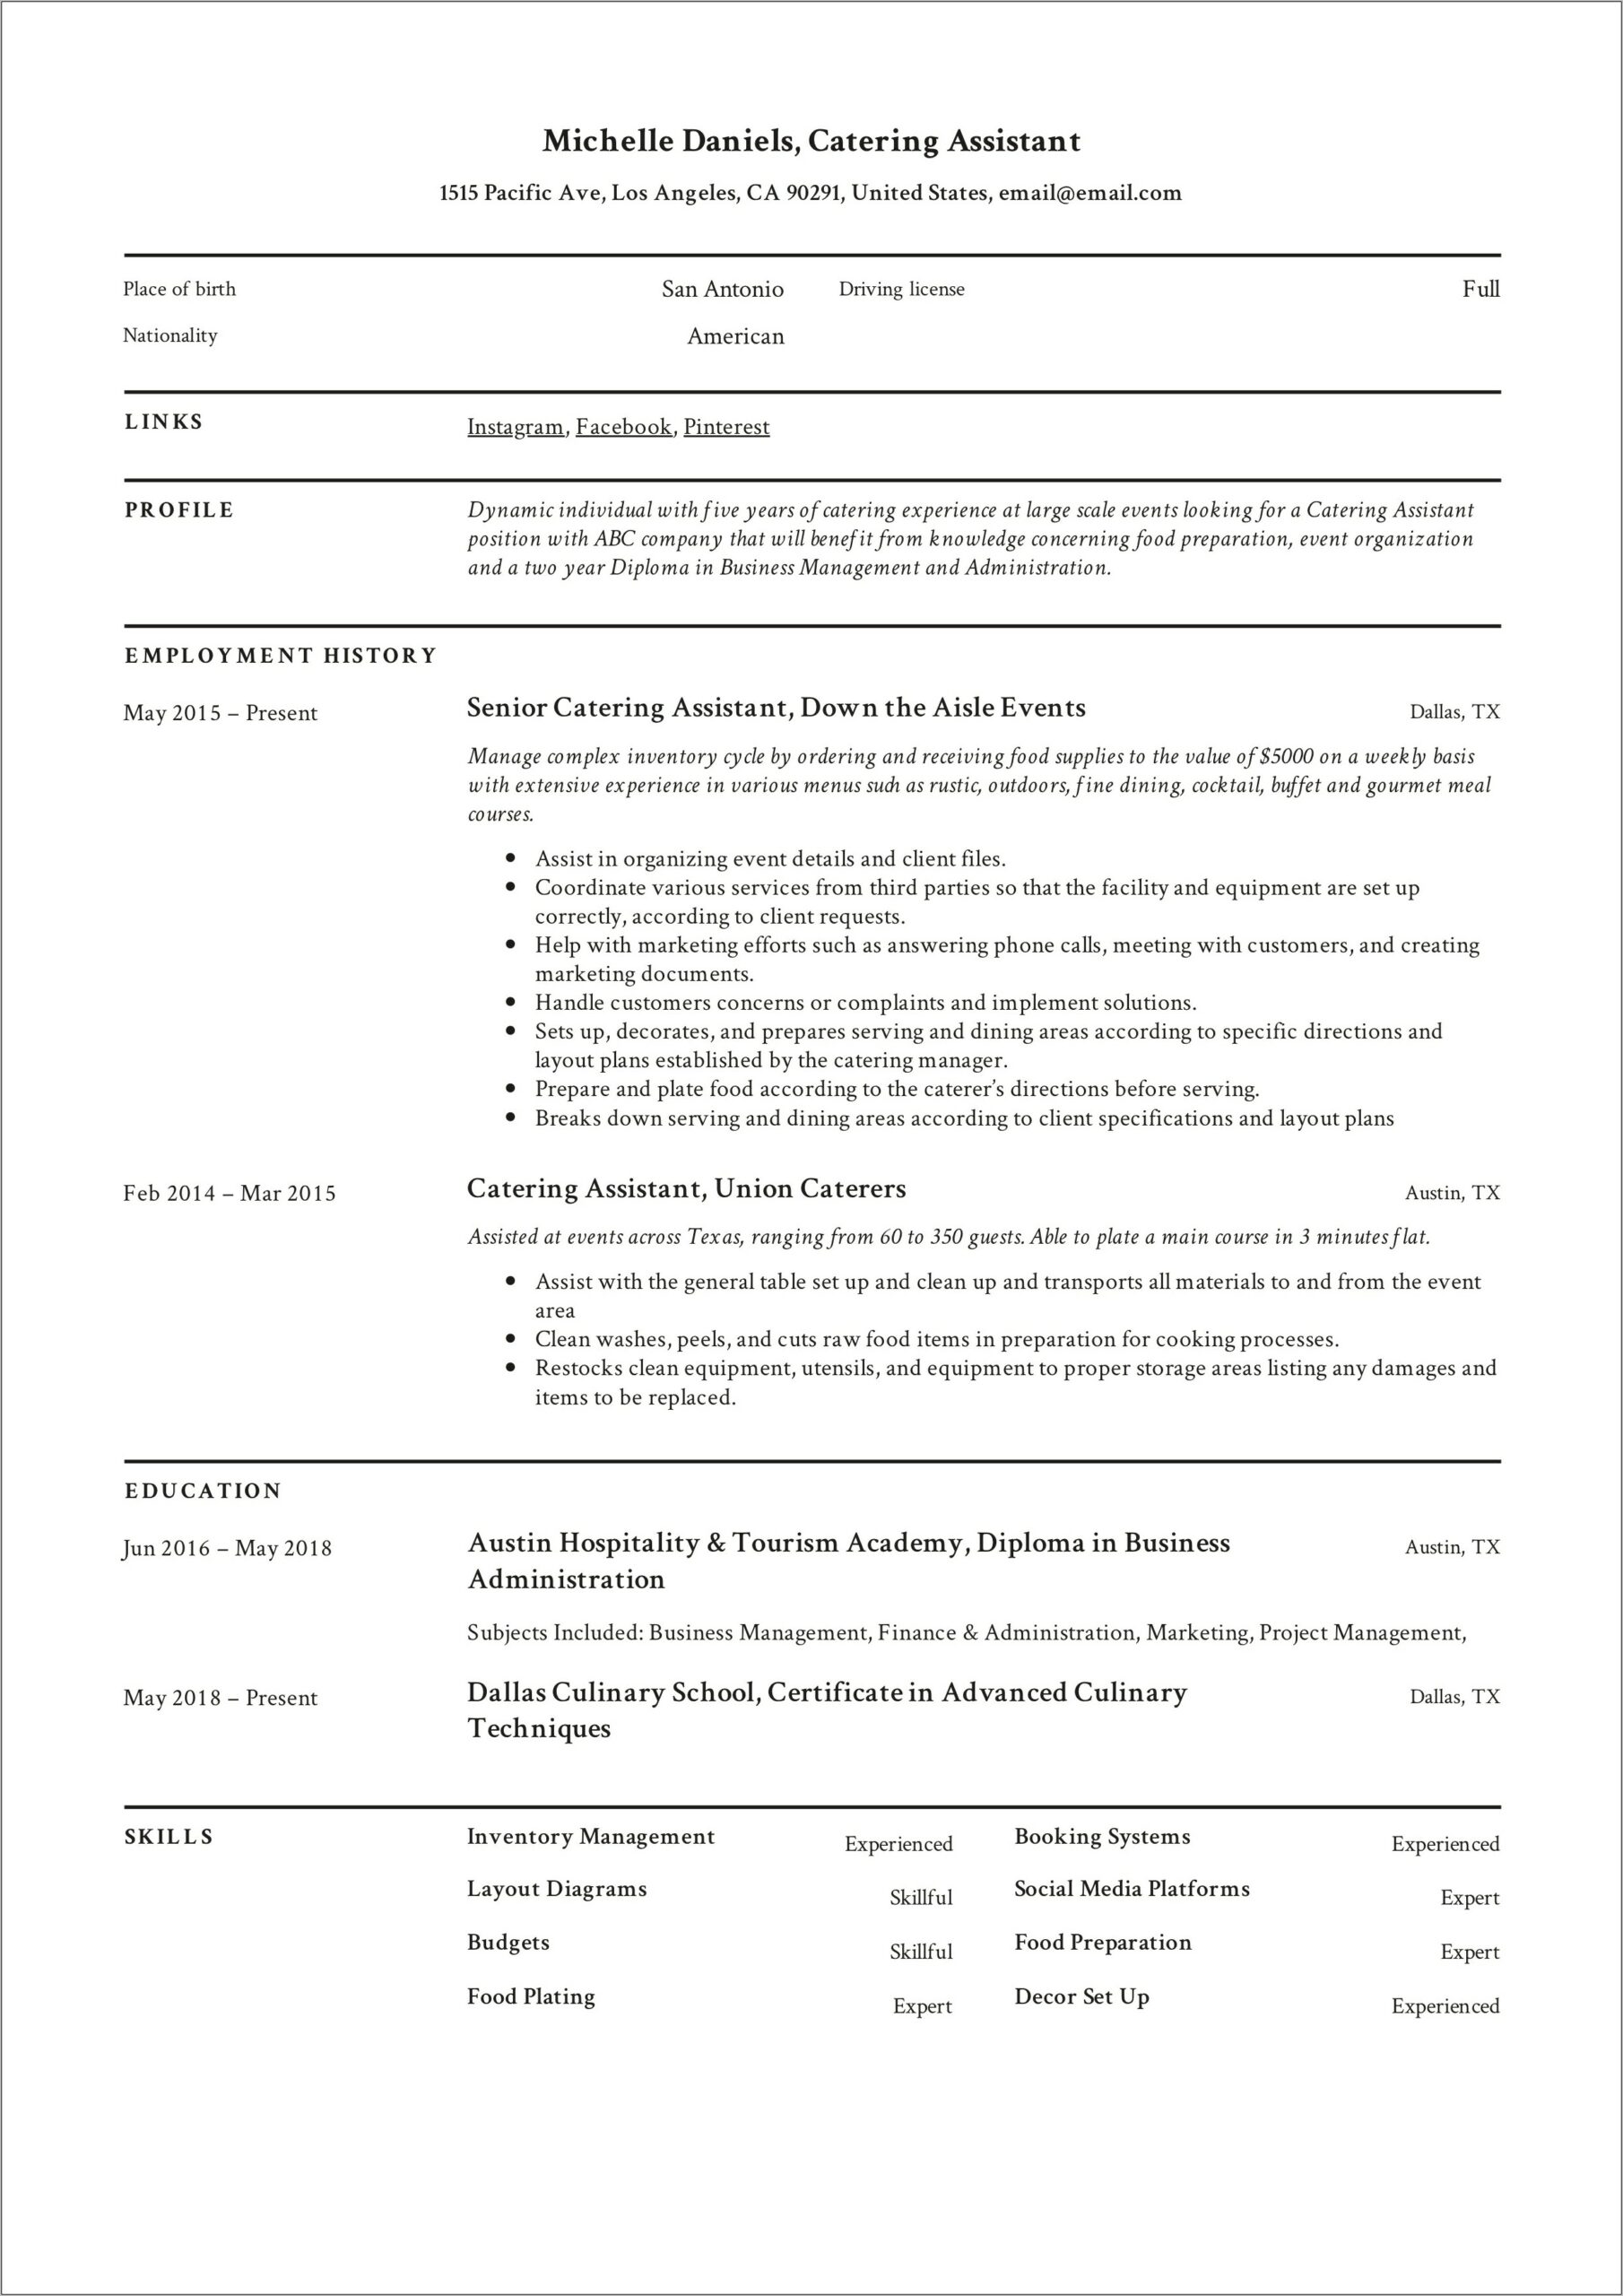 Catering Company Profile Sample Resume